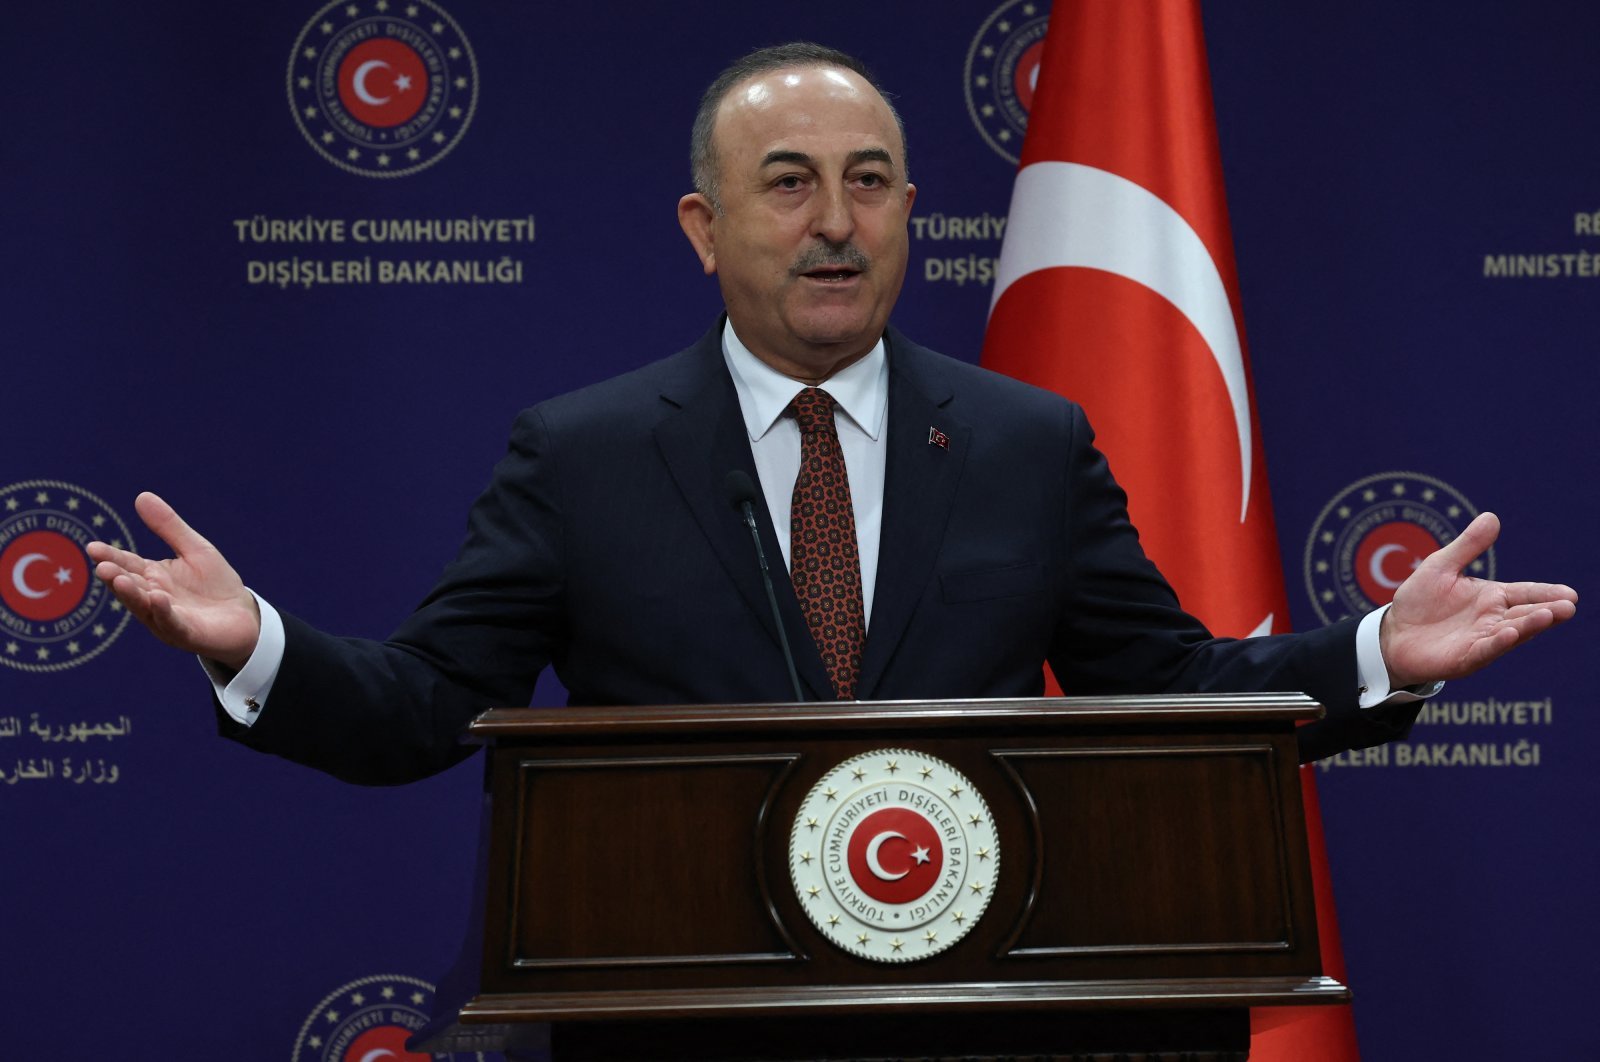 Türkiye, Russia, Iran, Syria to form committee: Turkish FM